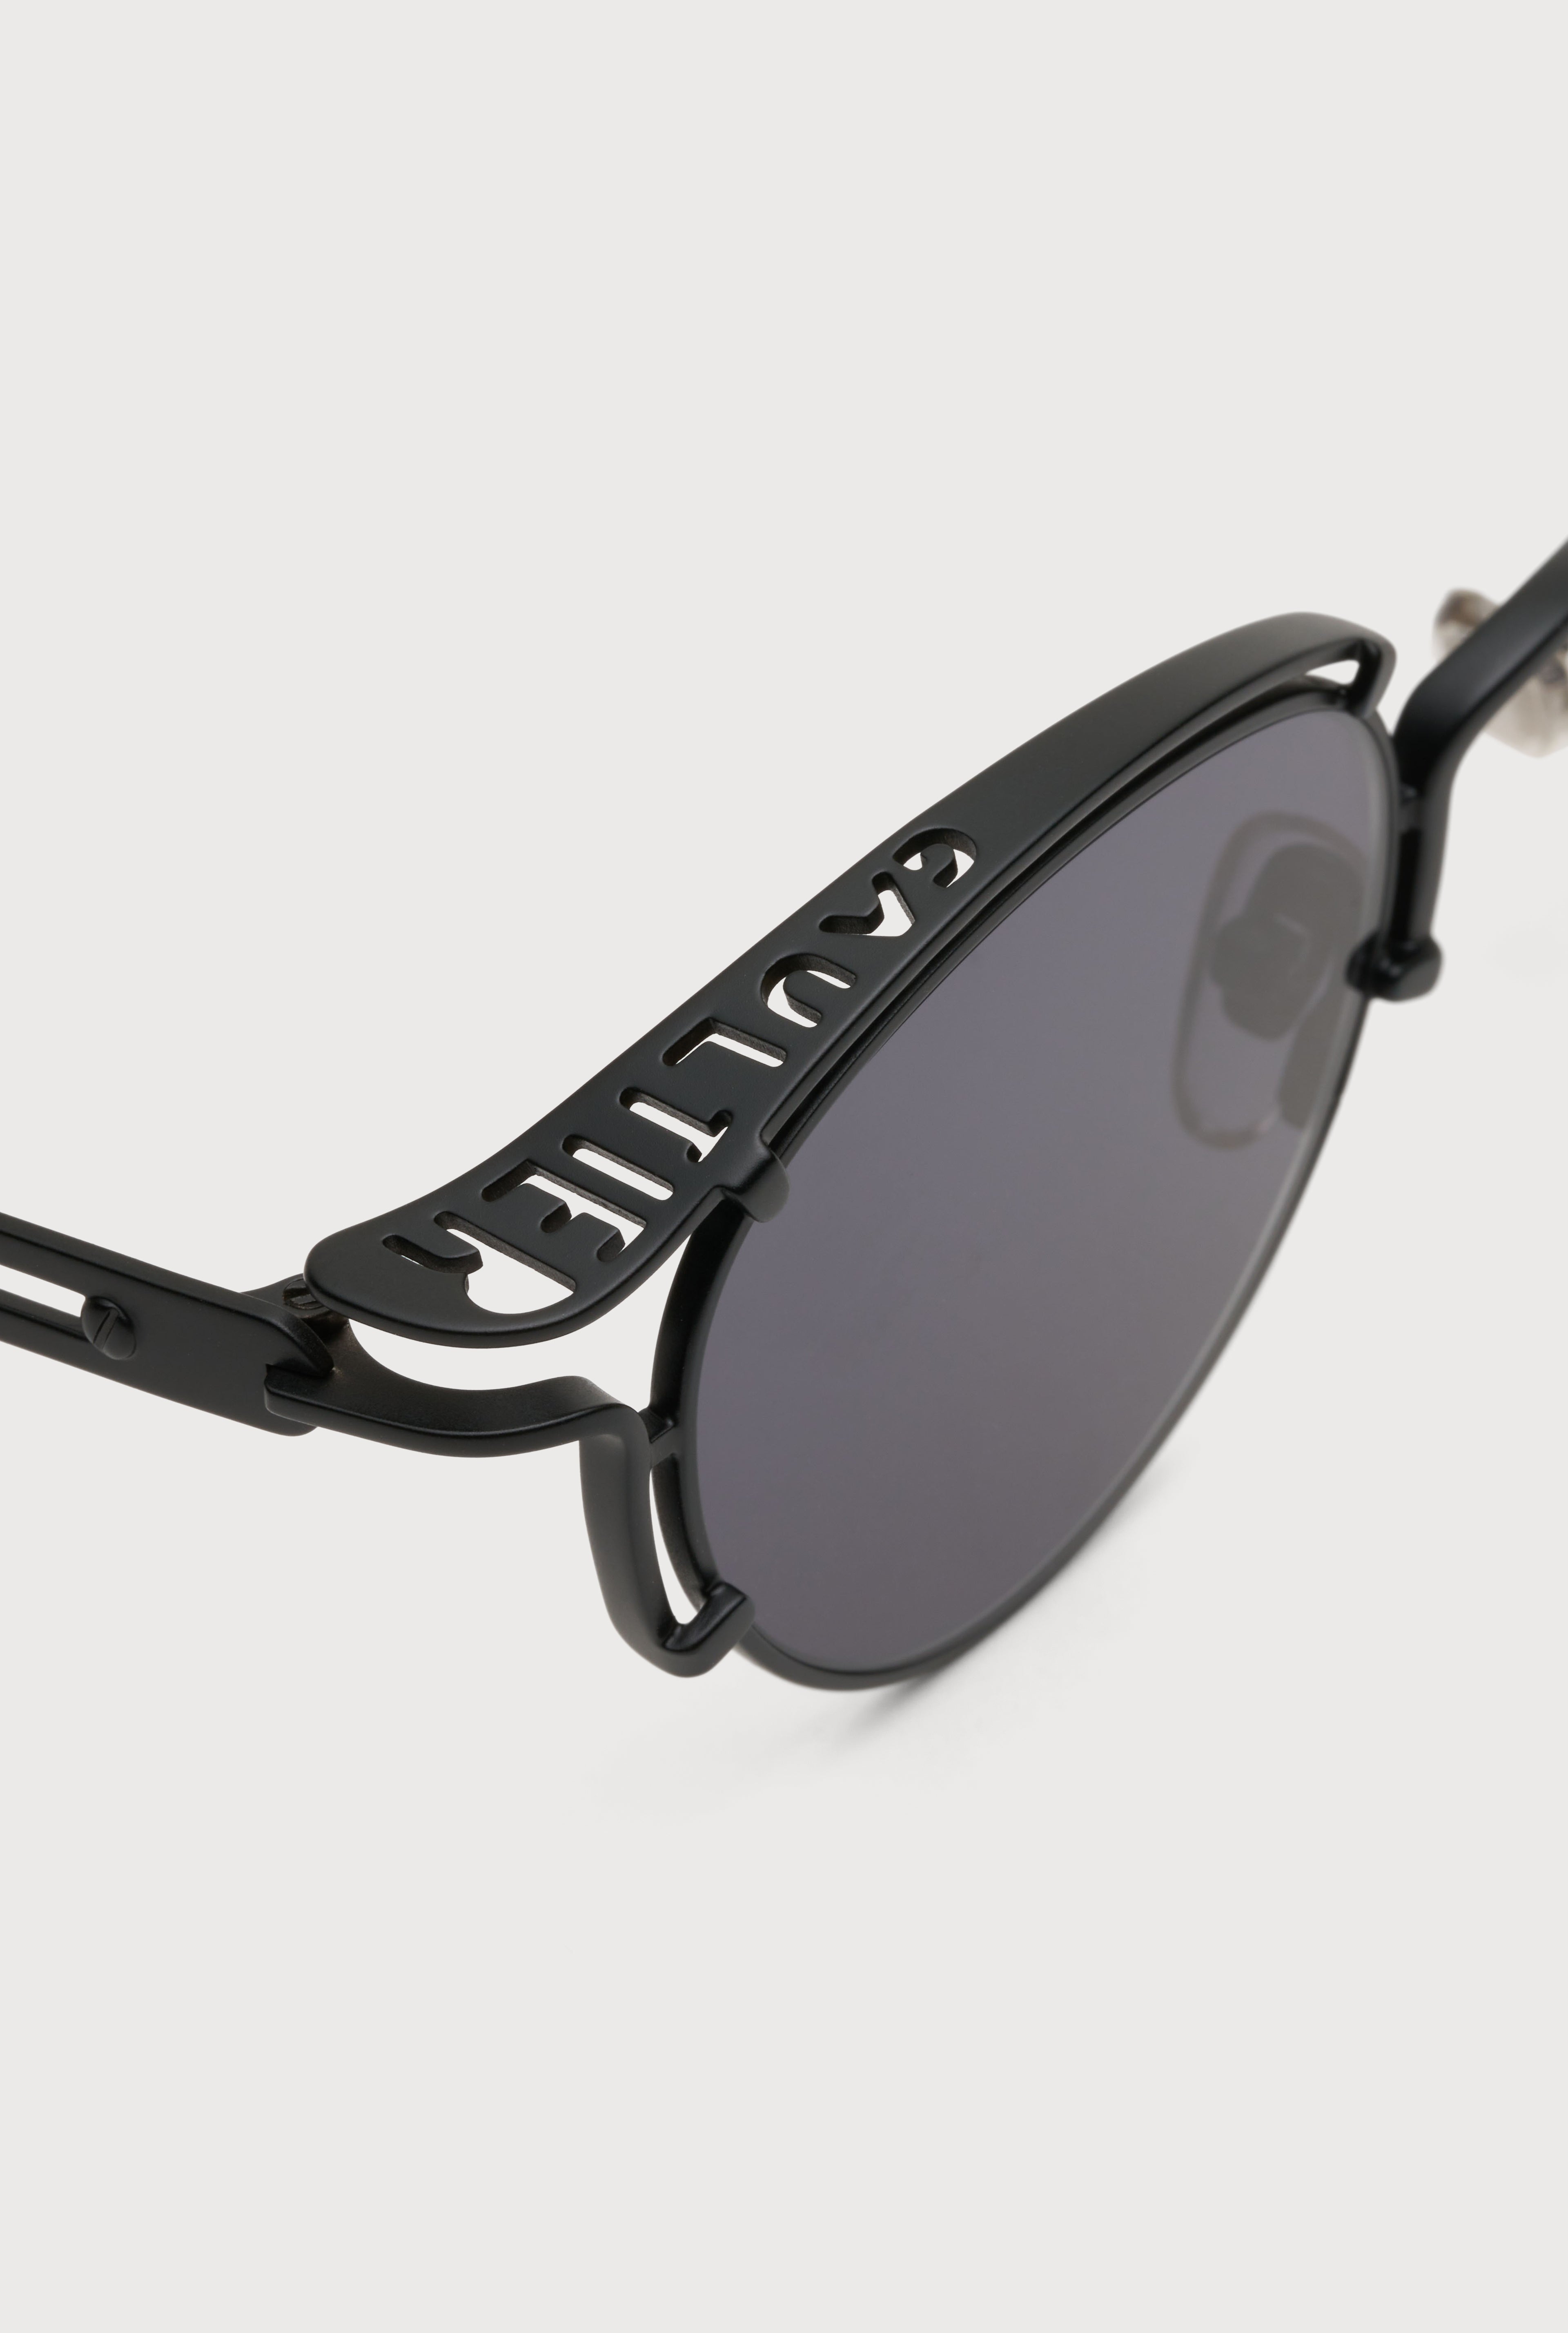 The Black 56-5102 Sunglasses